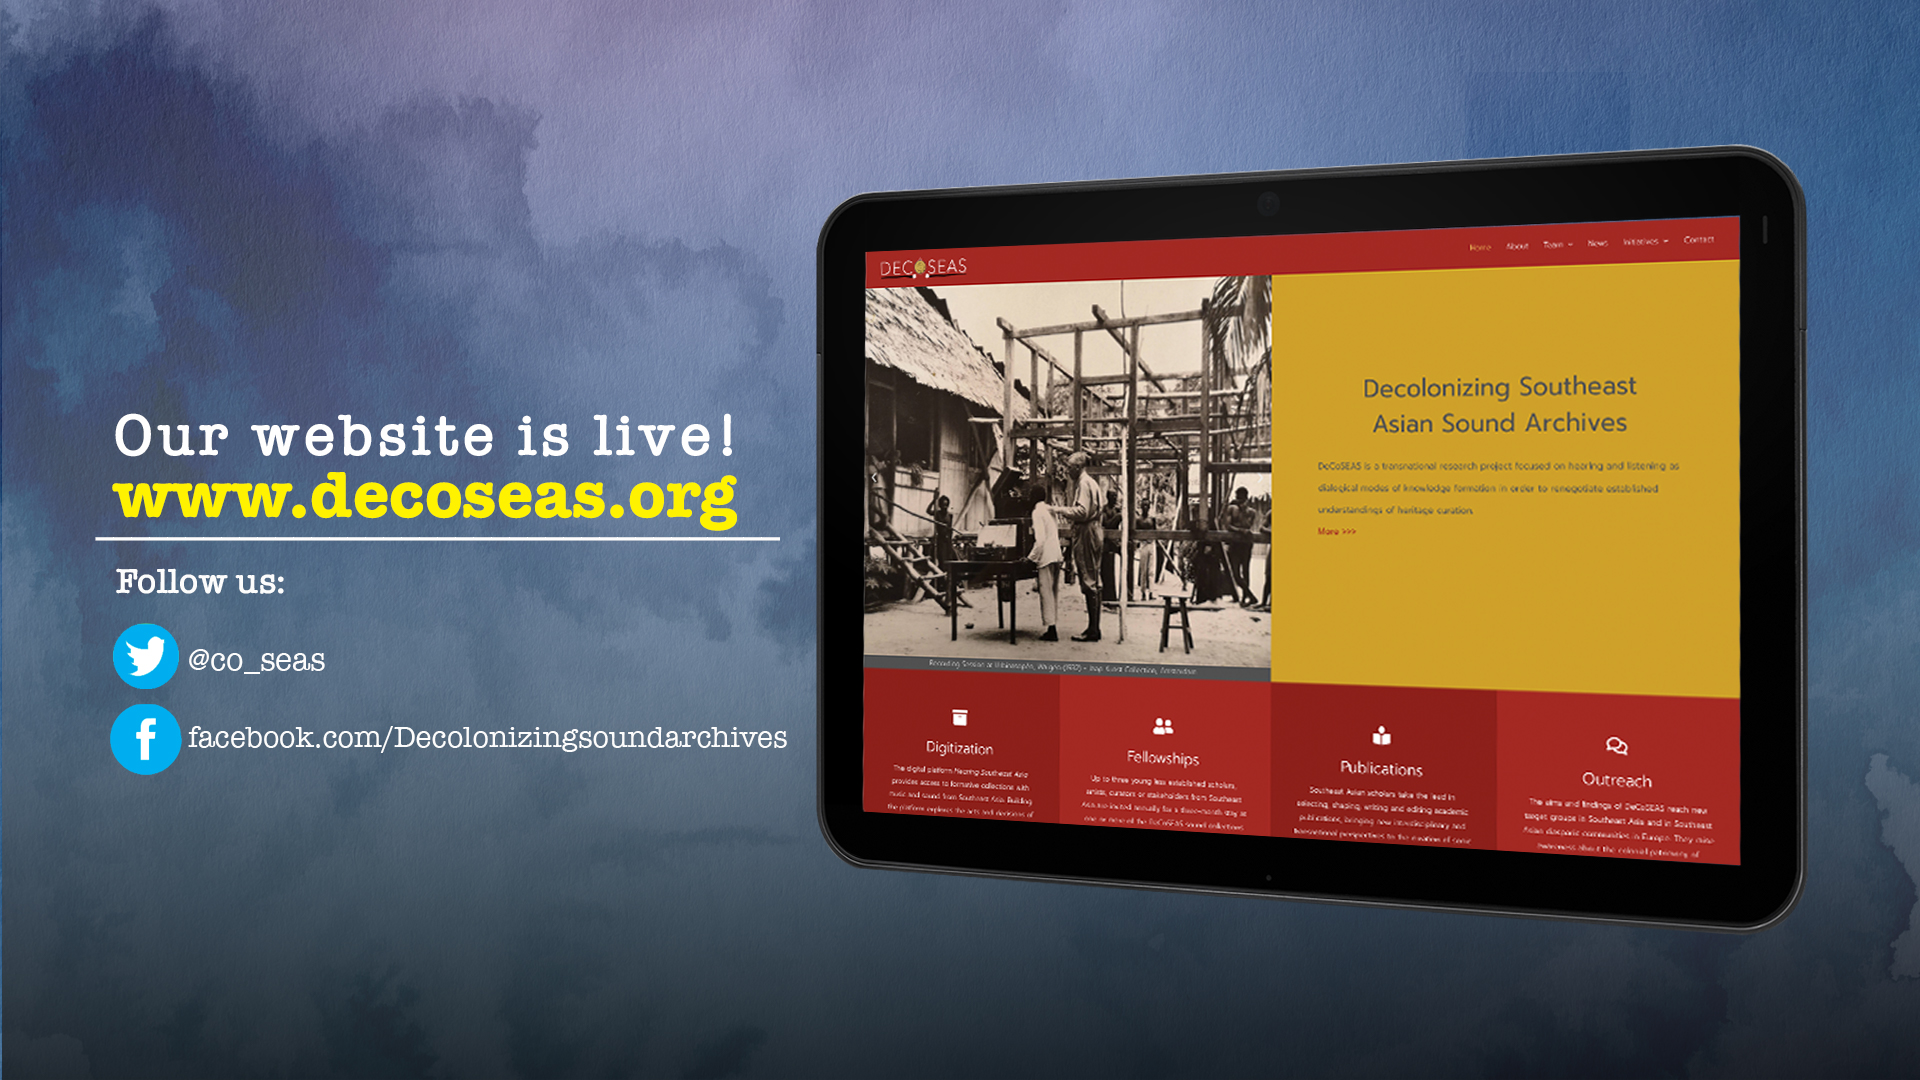 The DeCoSEAS website is up!